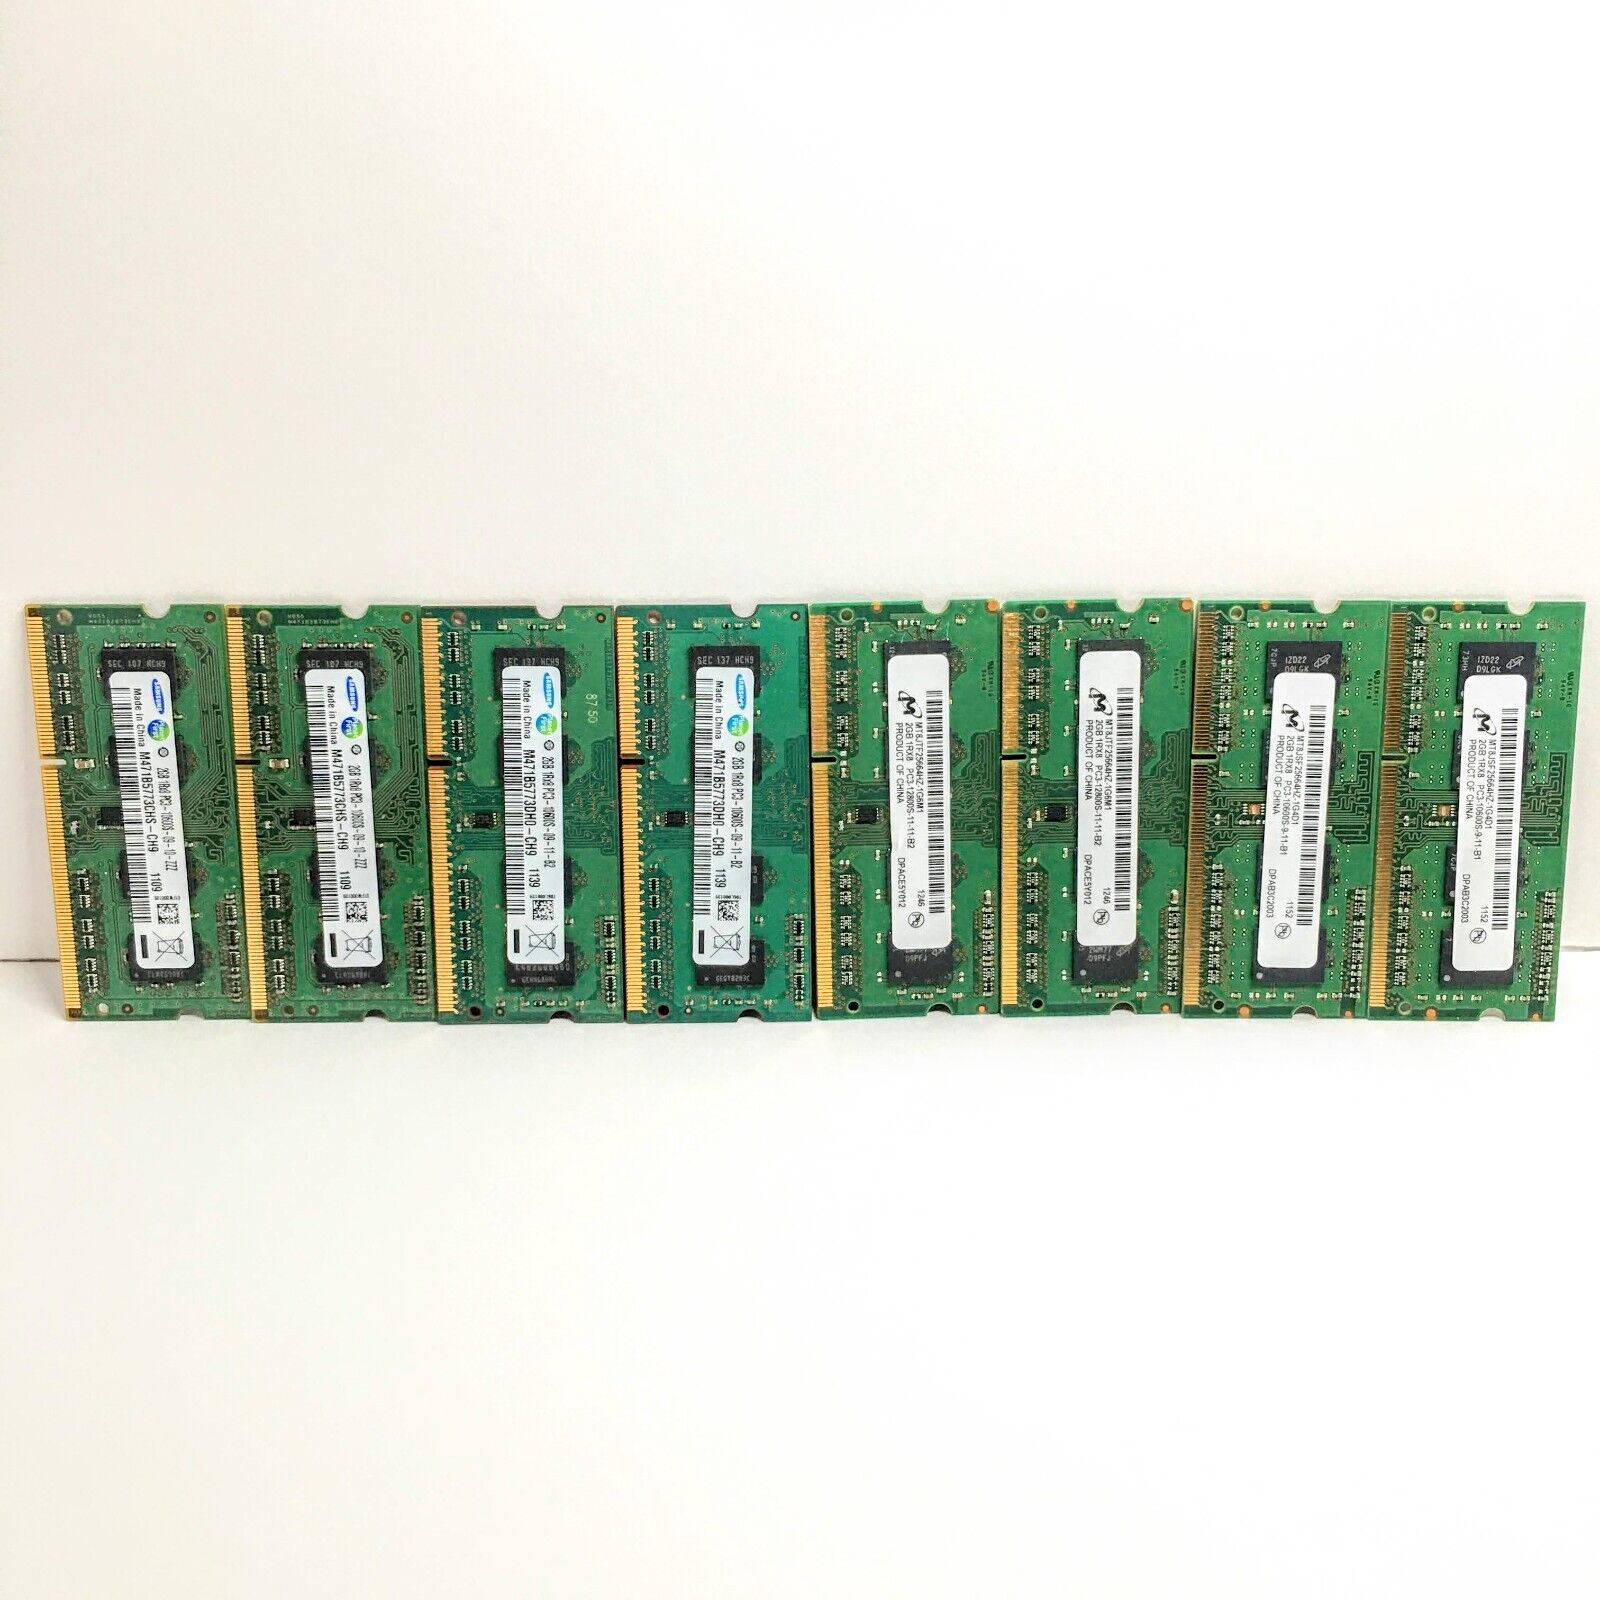 8x Mixed Lot of DDR3 RAM (8x 2GB) PC3-10600S 1333MHz Laptop SODIMM Memory